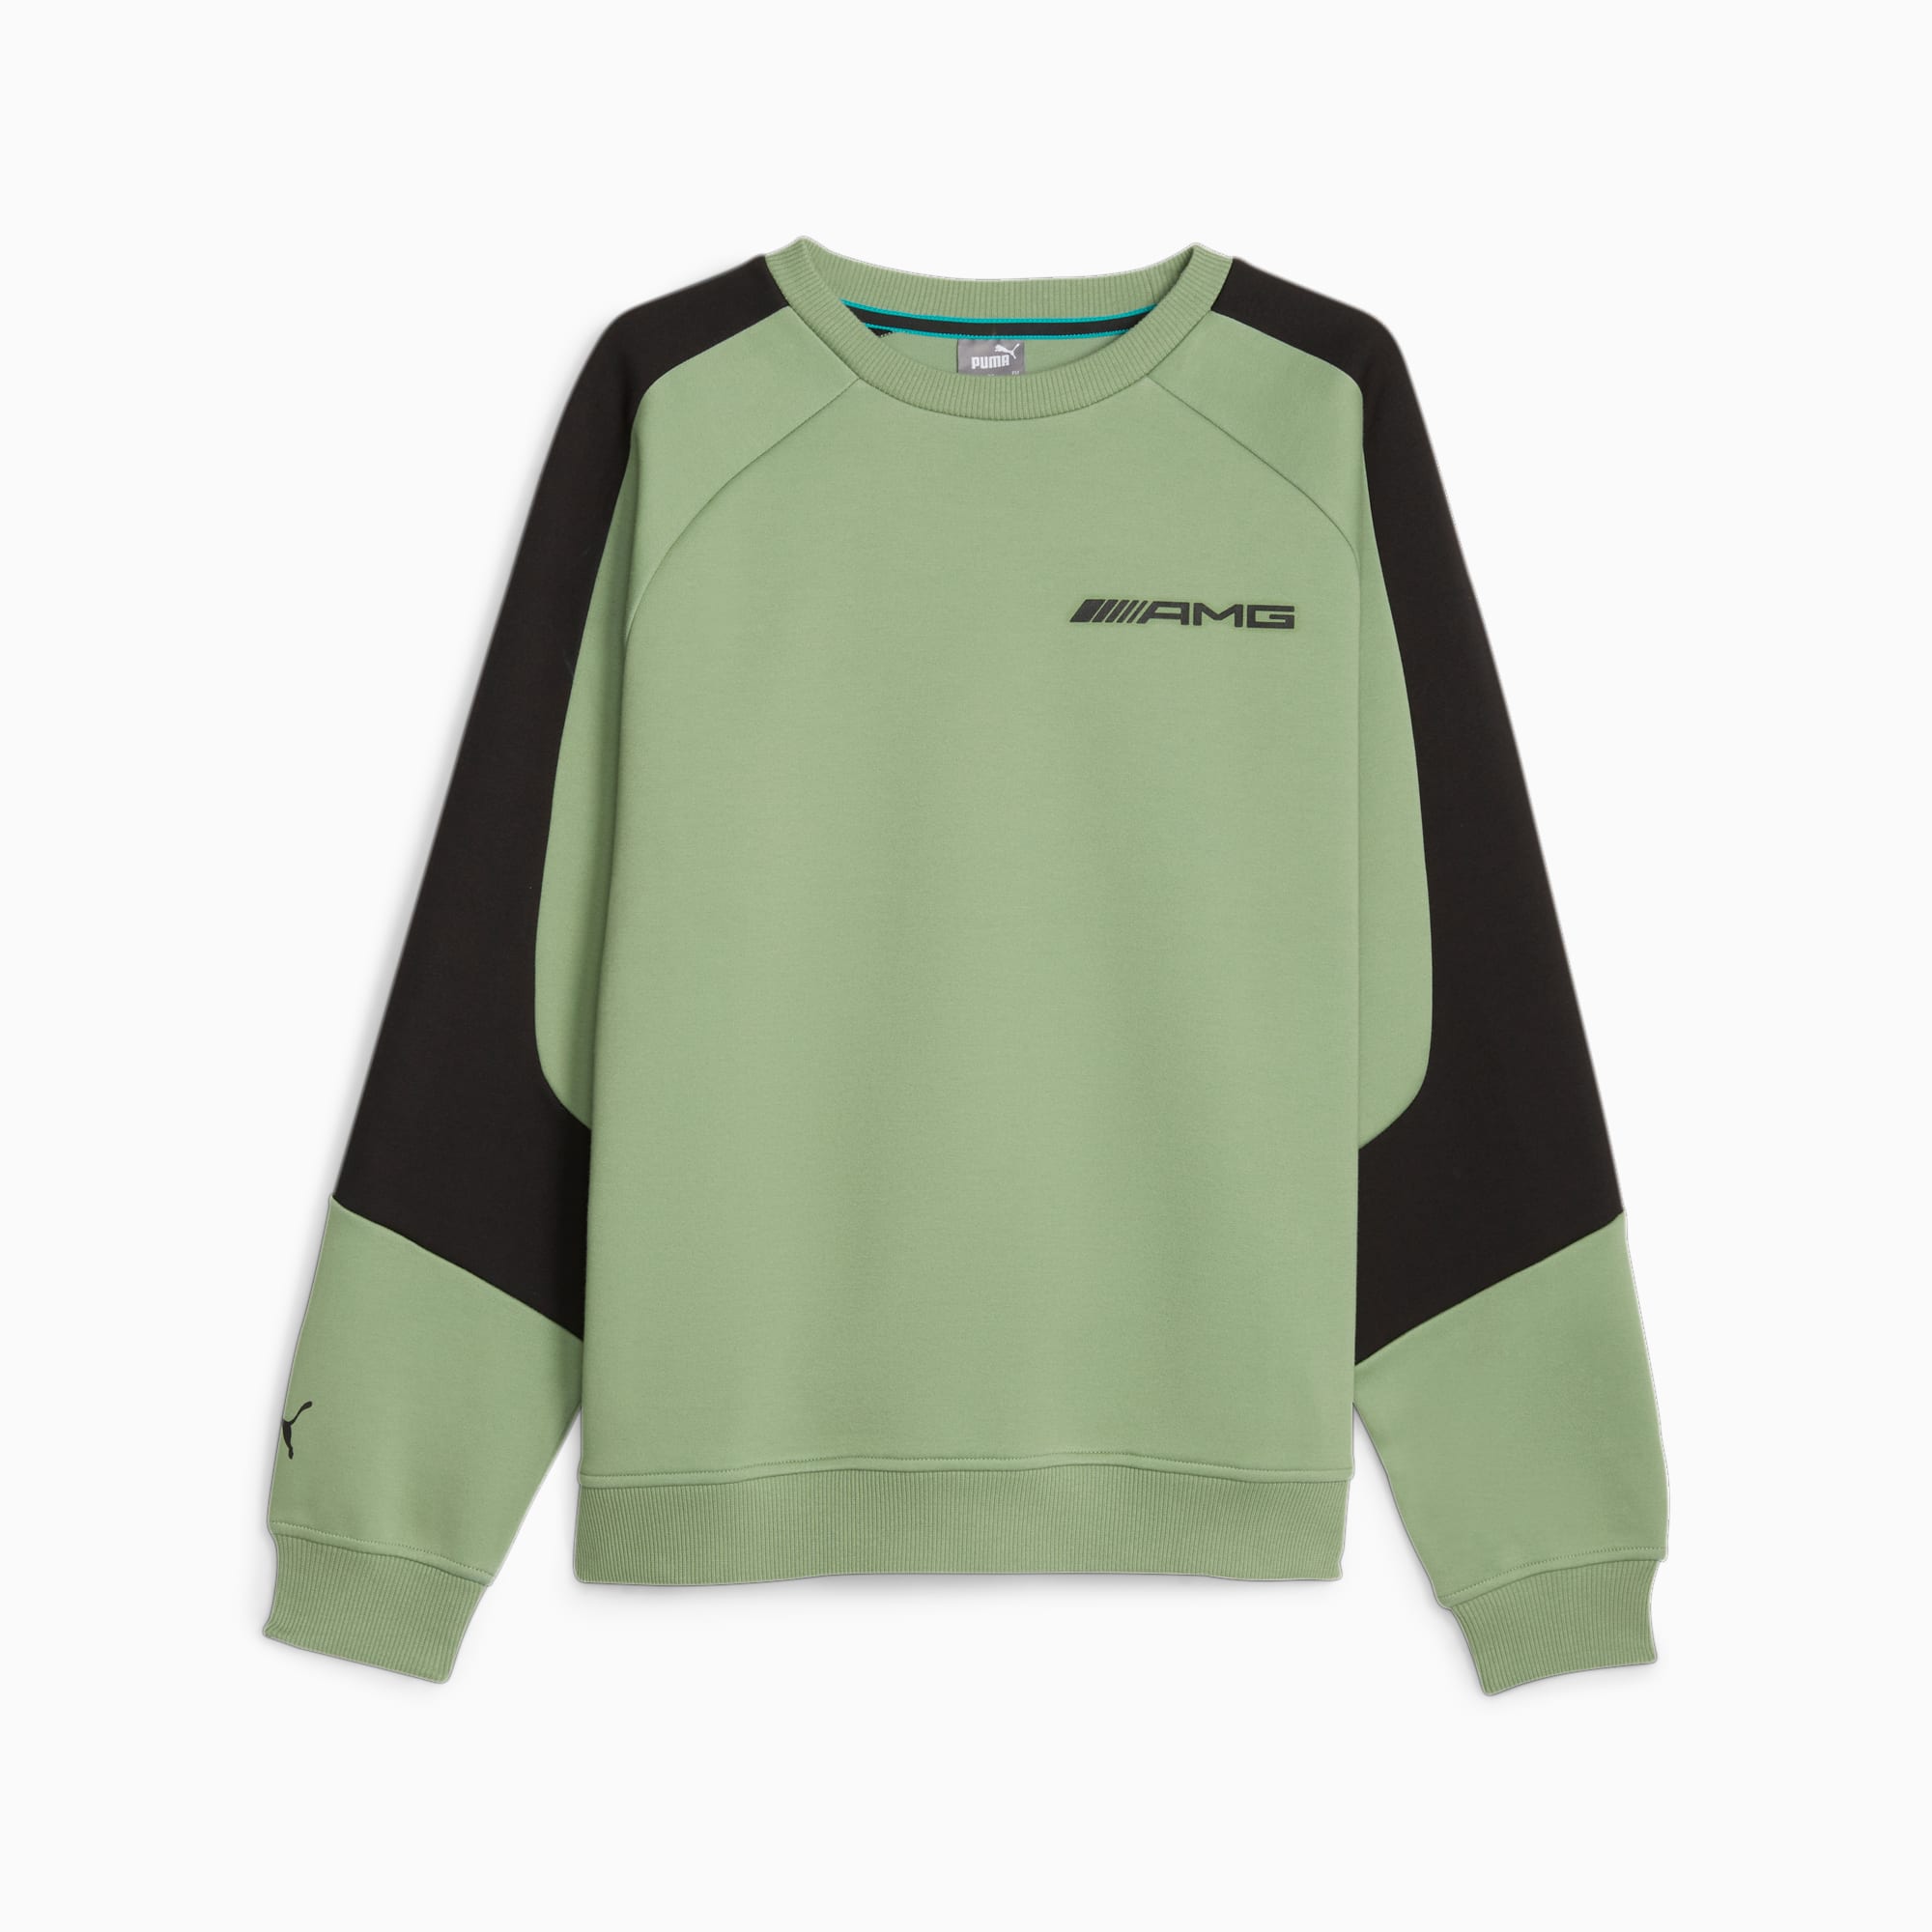 PUMA Mercedes-Amg Men's Sweatshirt, Dusty Green